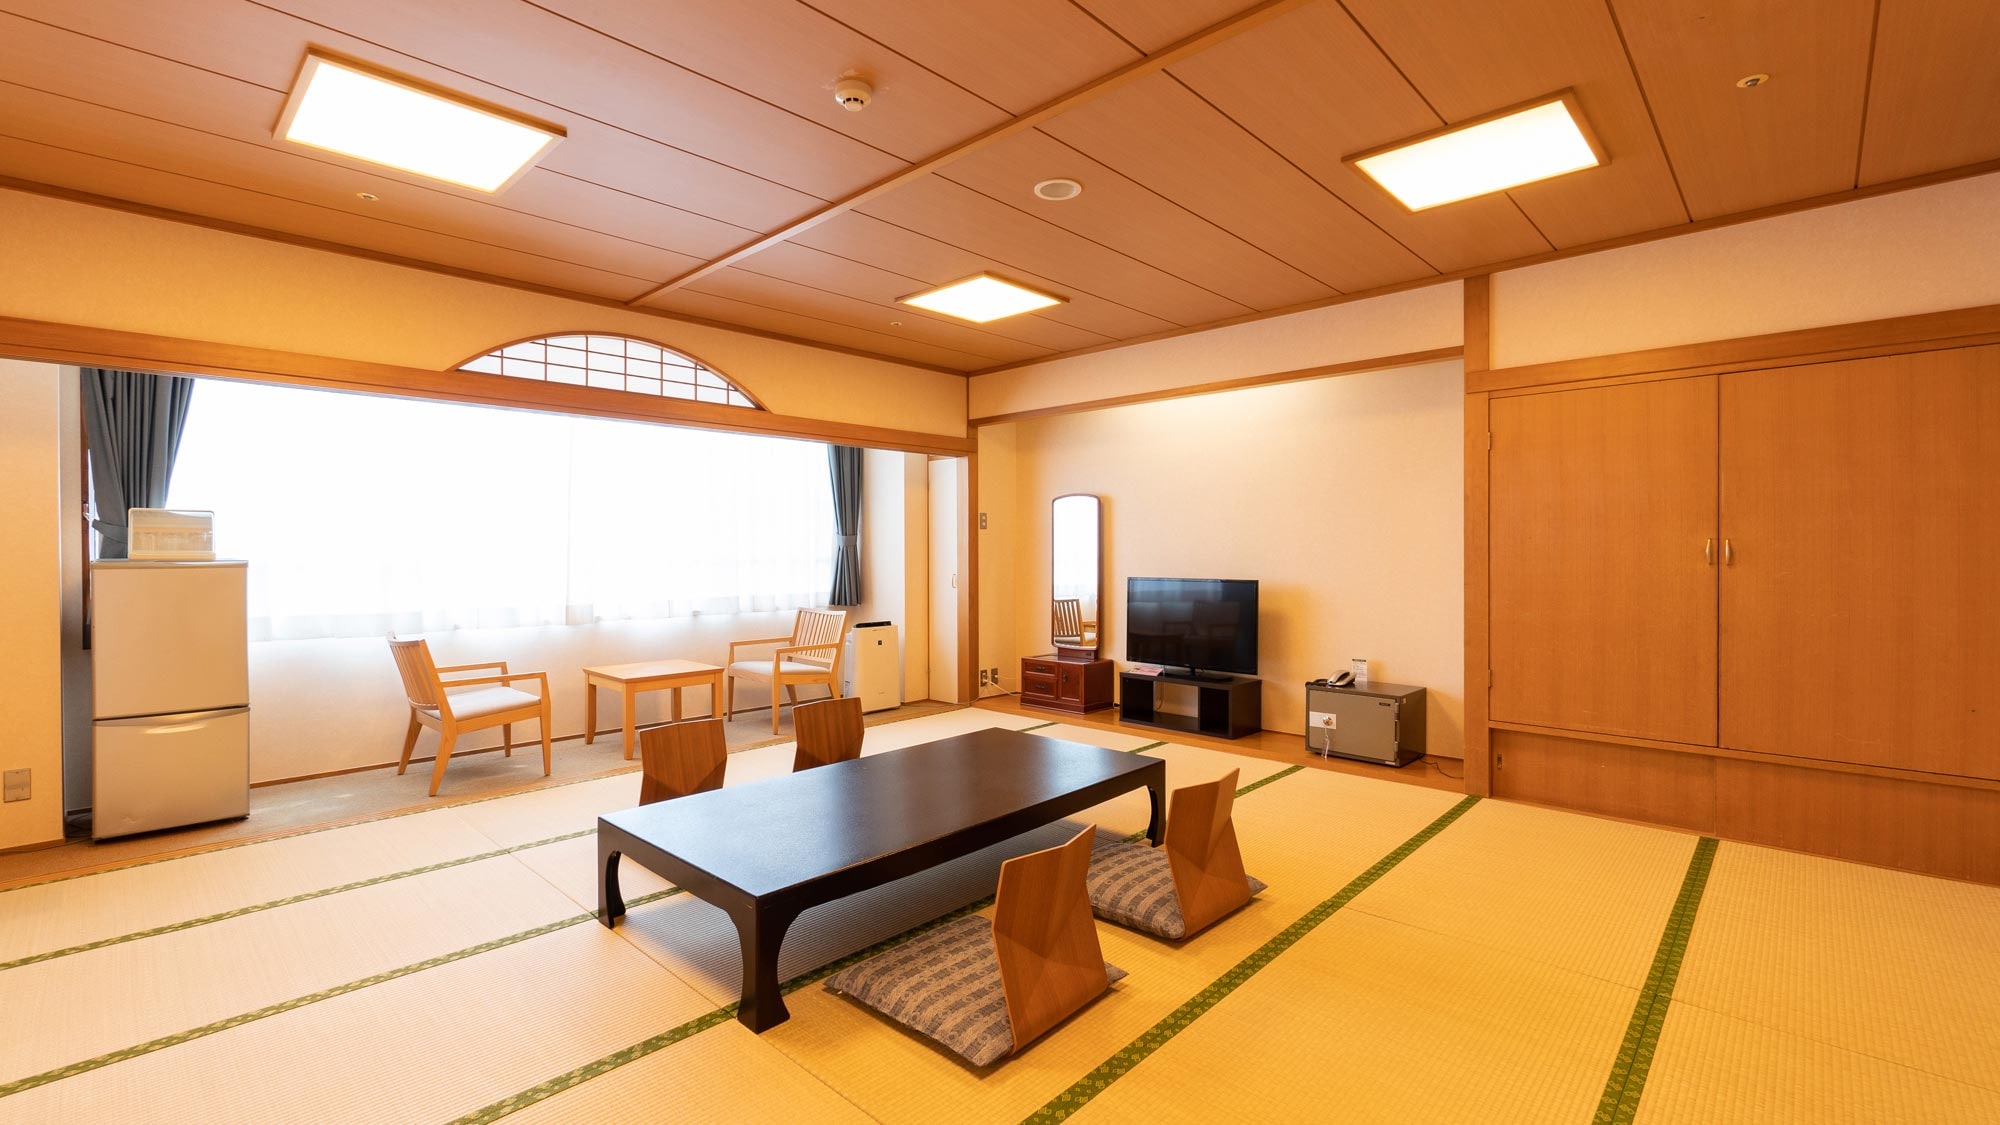 Japanese-style room 16 tatami mats